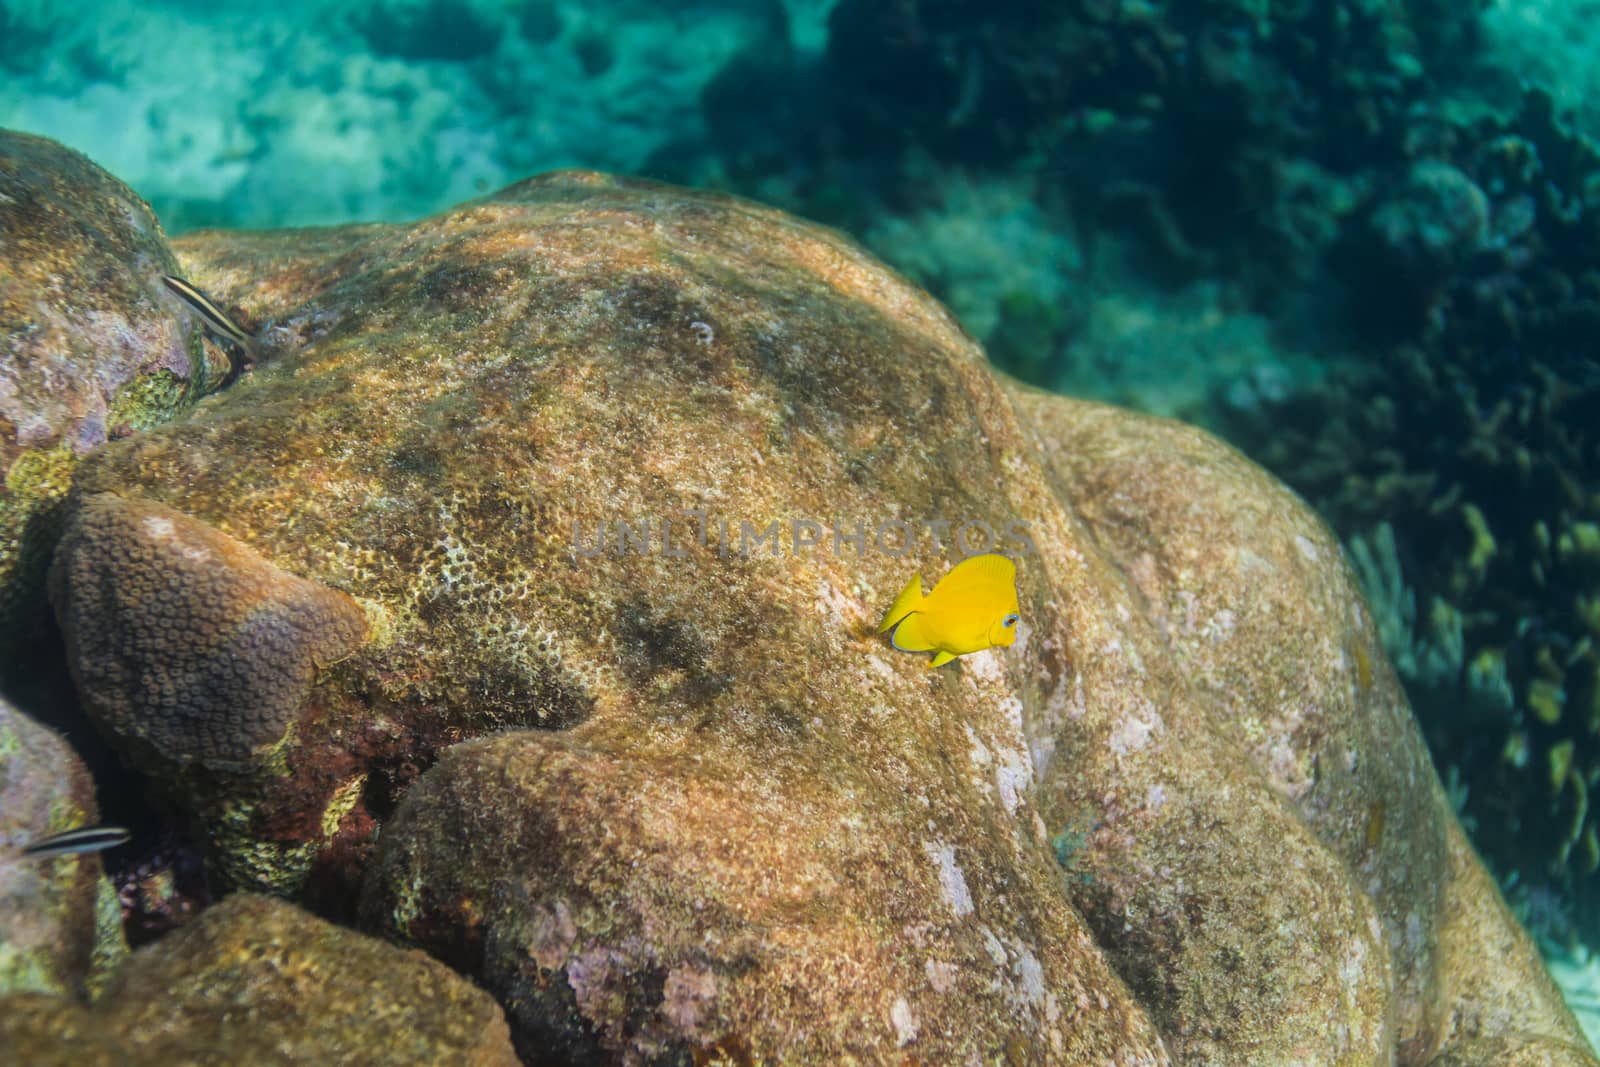 Juvenile Acanthusur coeruleus swimming over a rock